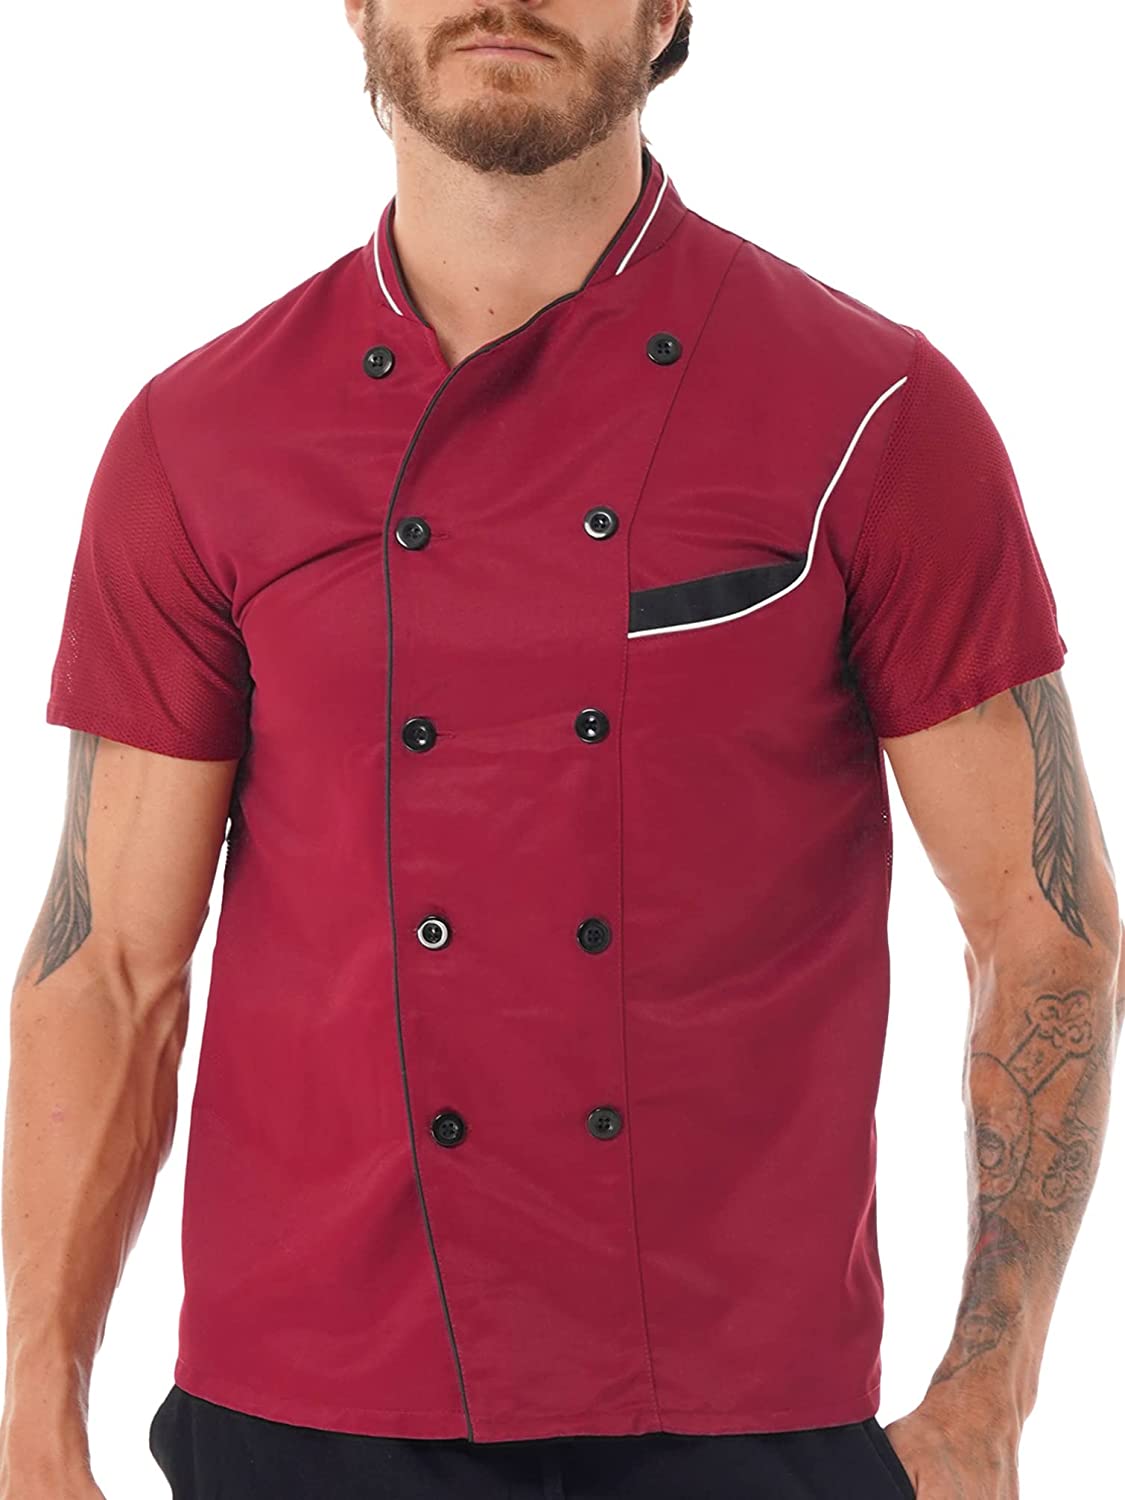 Men's Short Sleeve Chef Coat Jacket Restaurant Chef Uniform Breathable Tops with Pocket